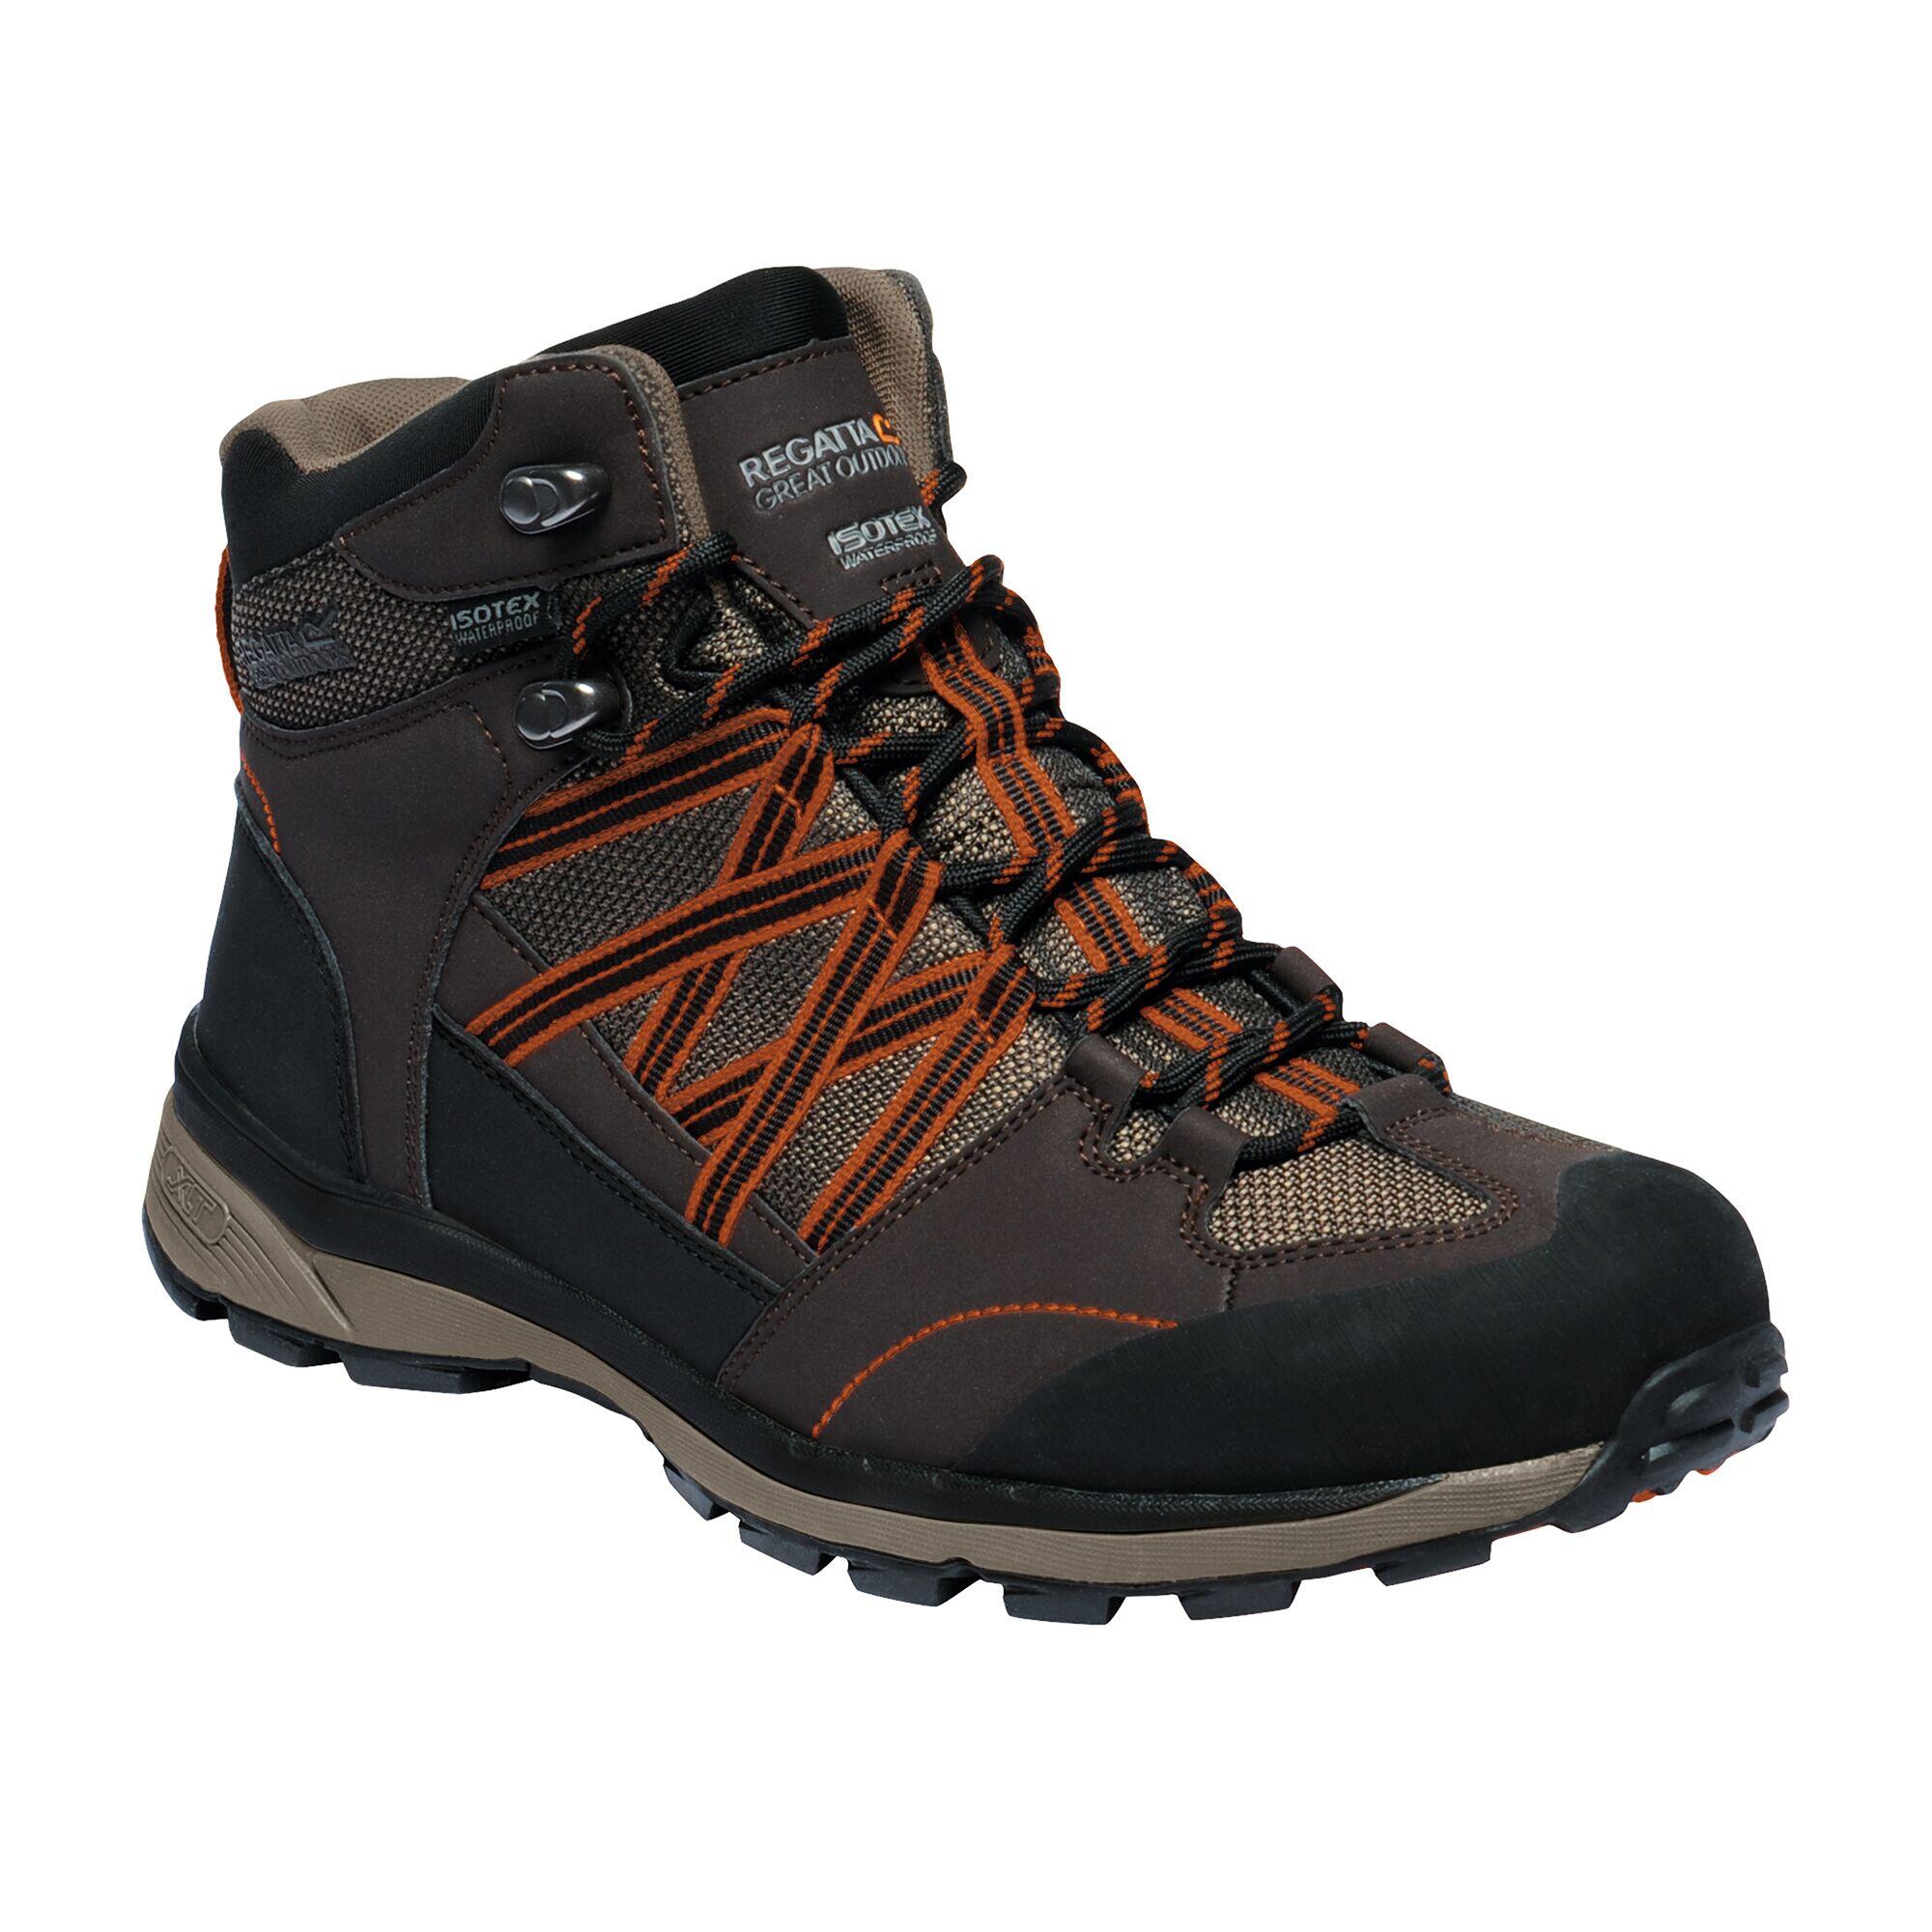 REGATTA Samaris II Men's Hiking Boots - Dark Brown/Gold